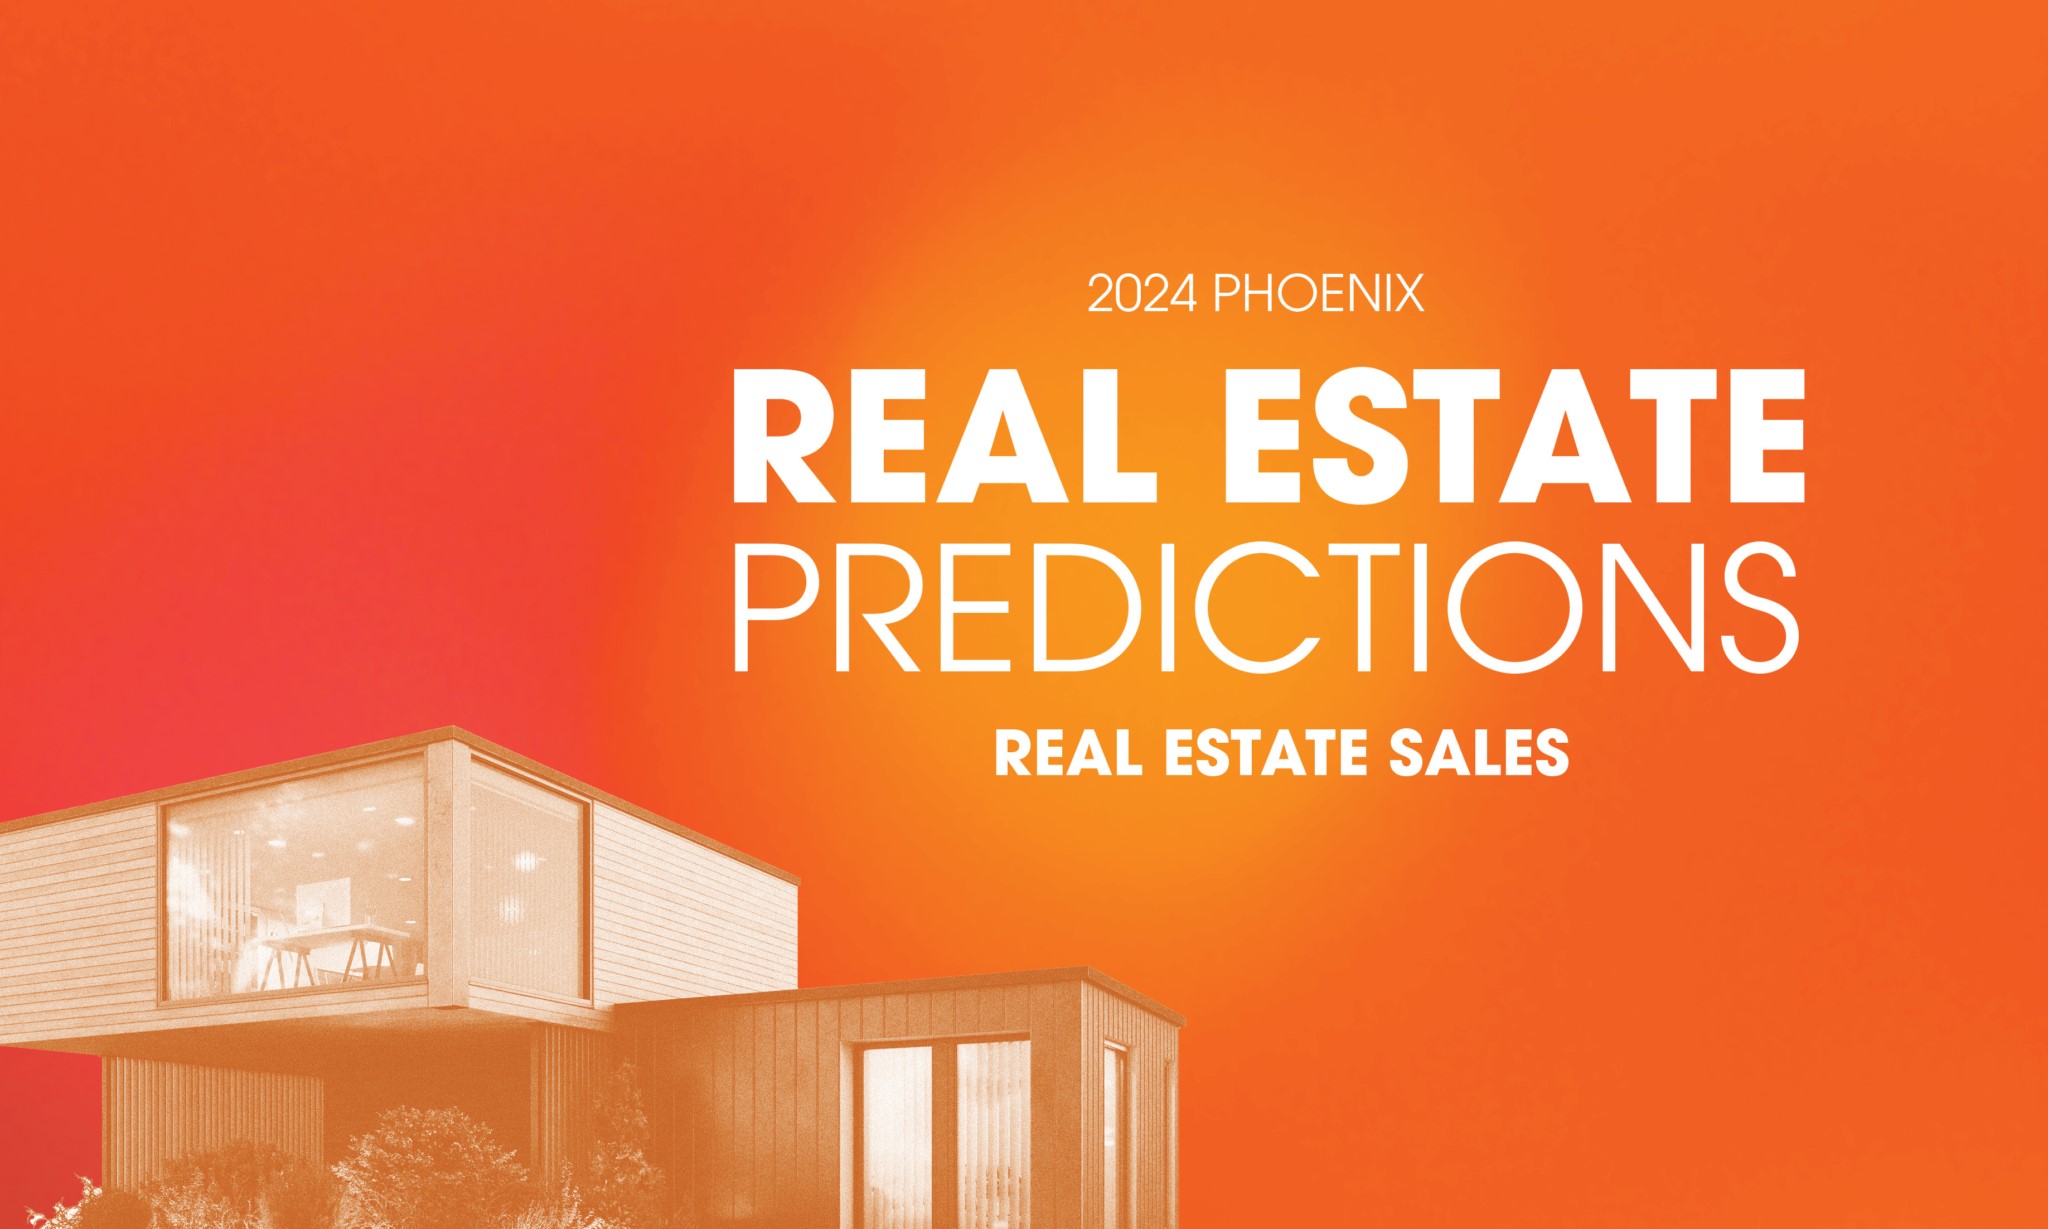 2024 Phoenix real estate sales predictions